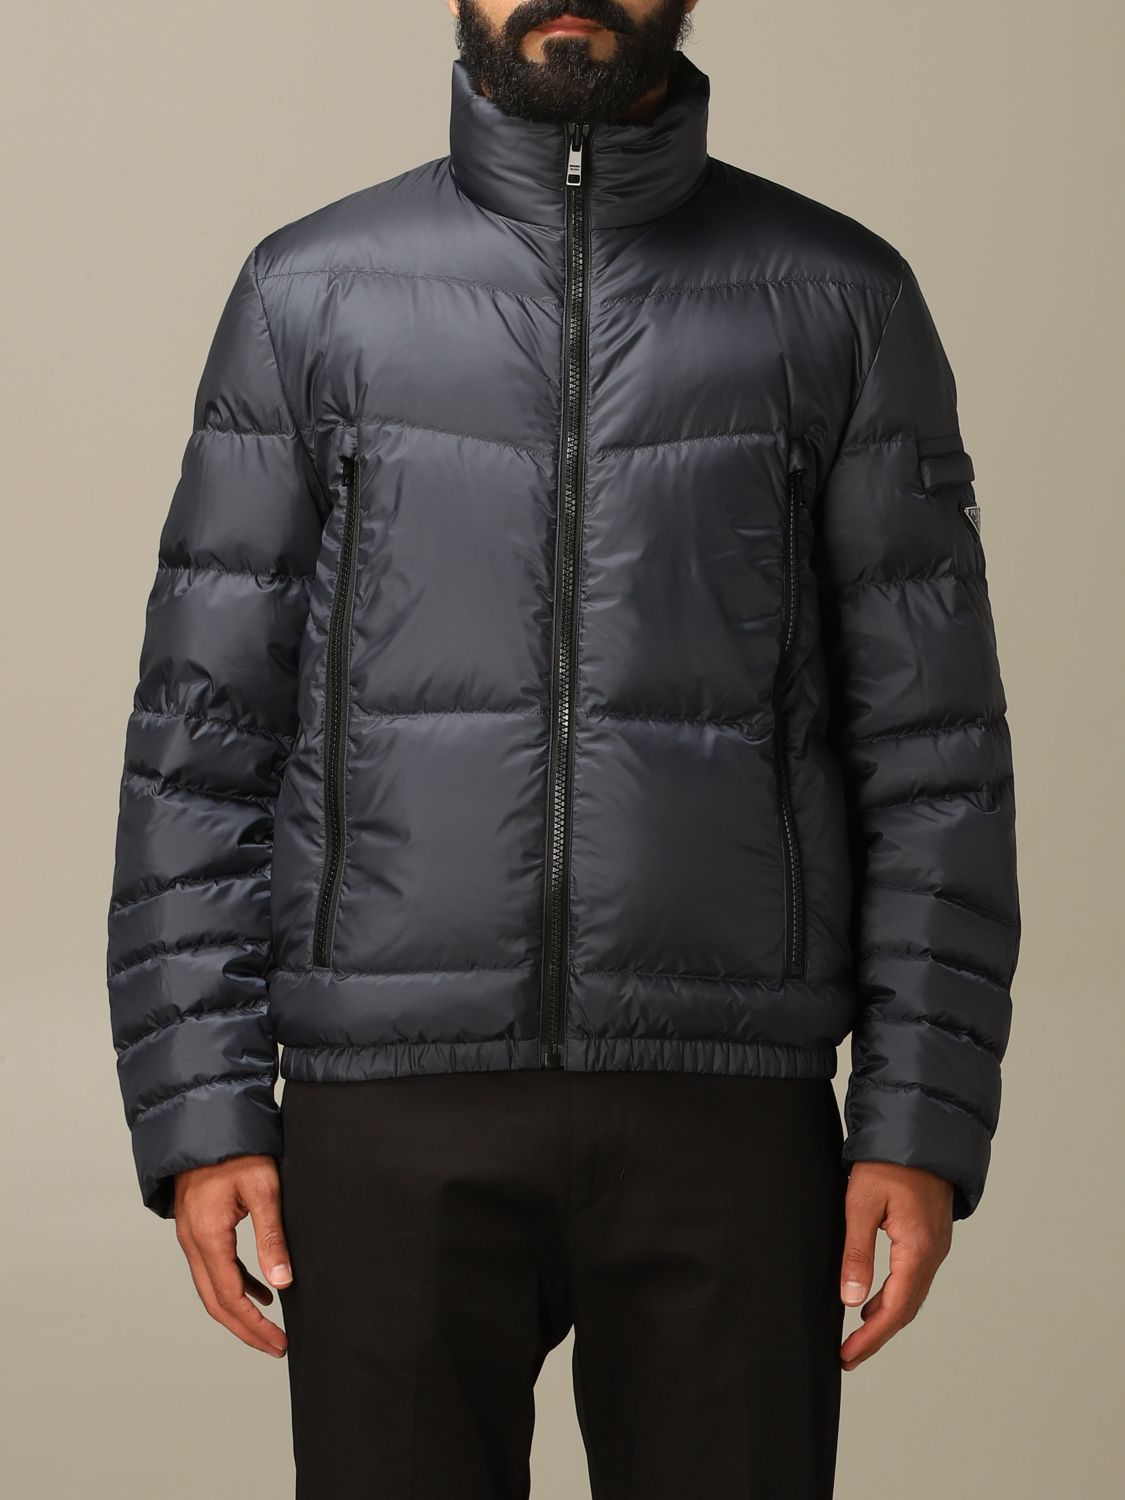 PRADA: technical leather down jacket with triangular logo - Navy | Prada  jacket SGB531 1ID1 online on 